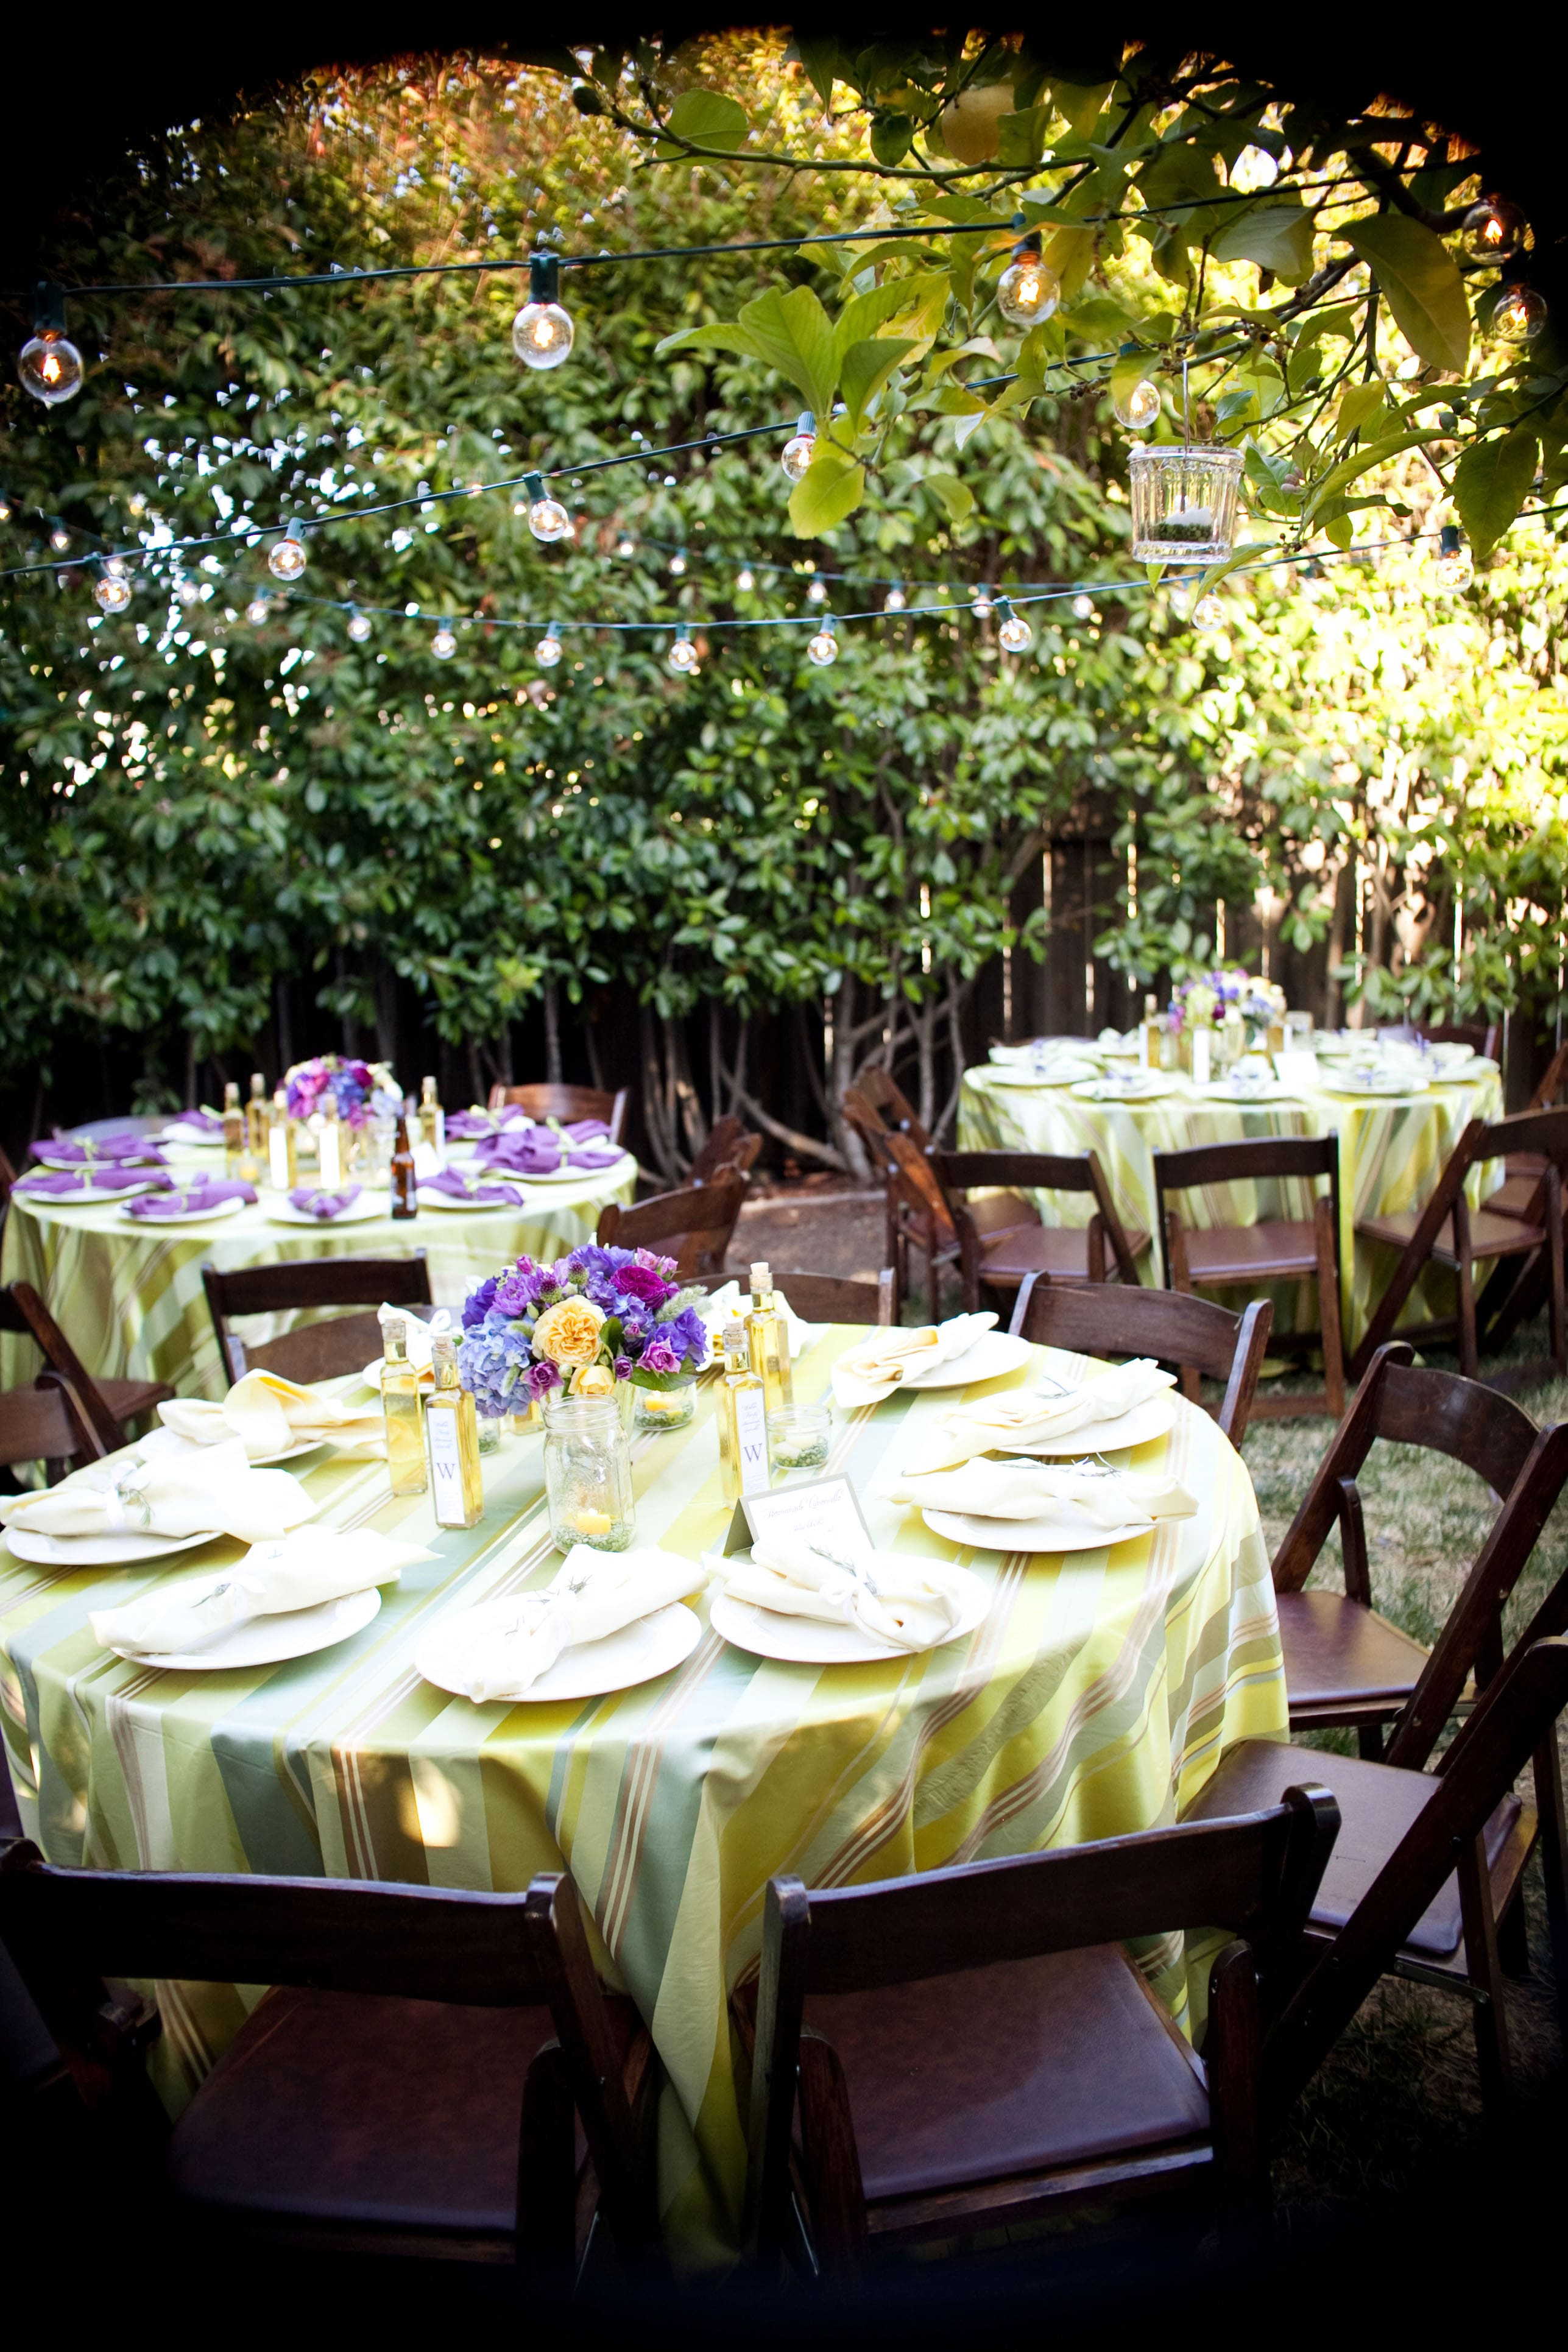 22.SIMPHOME.COM backyard bbq wedding reception outdoor furniture design ideas